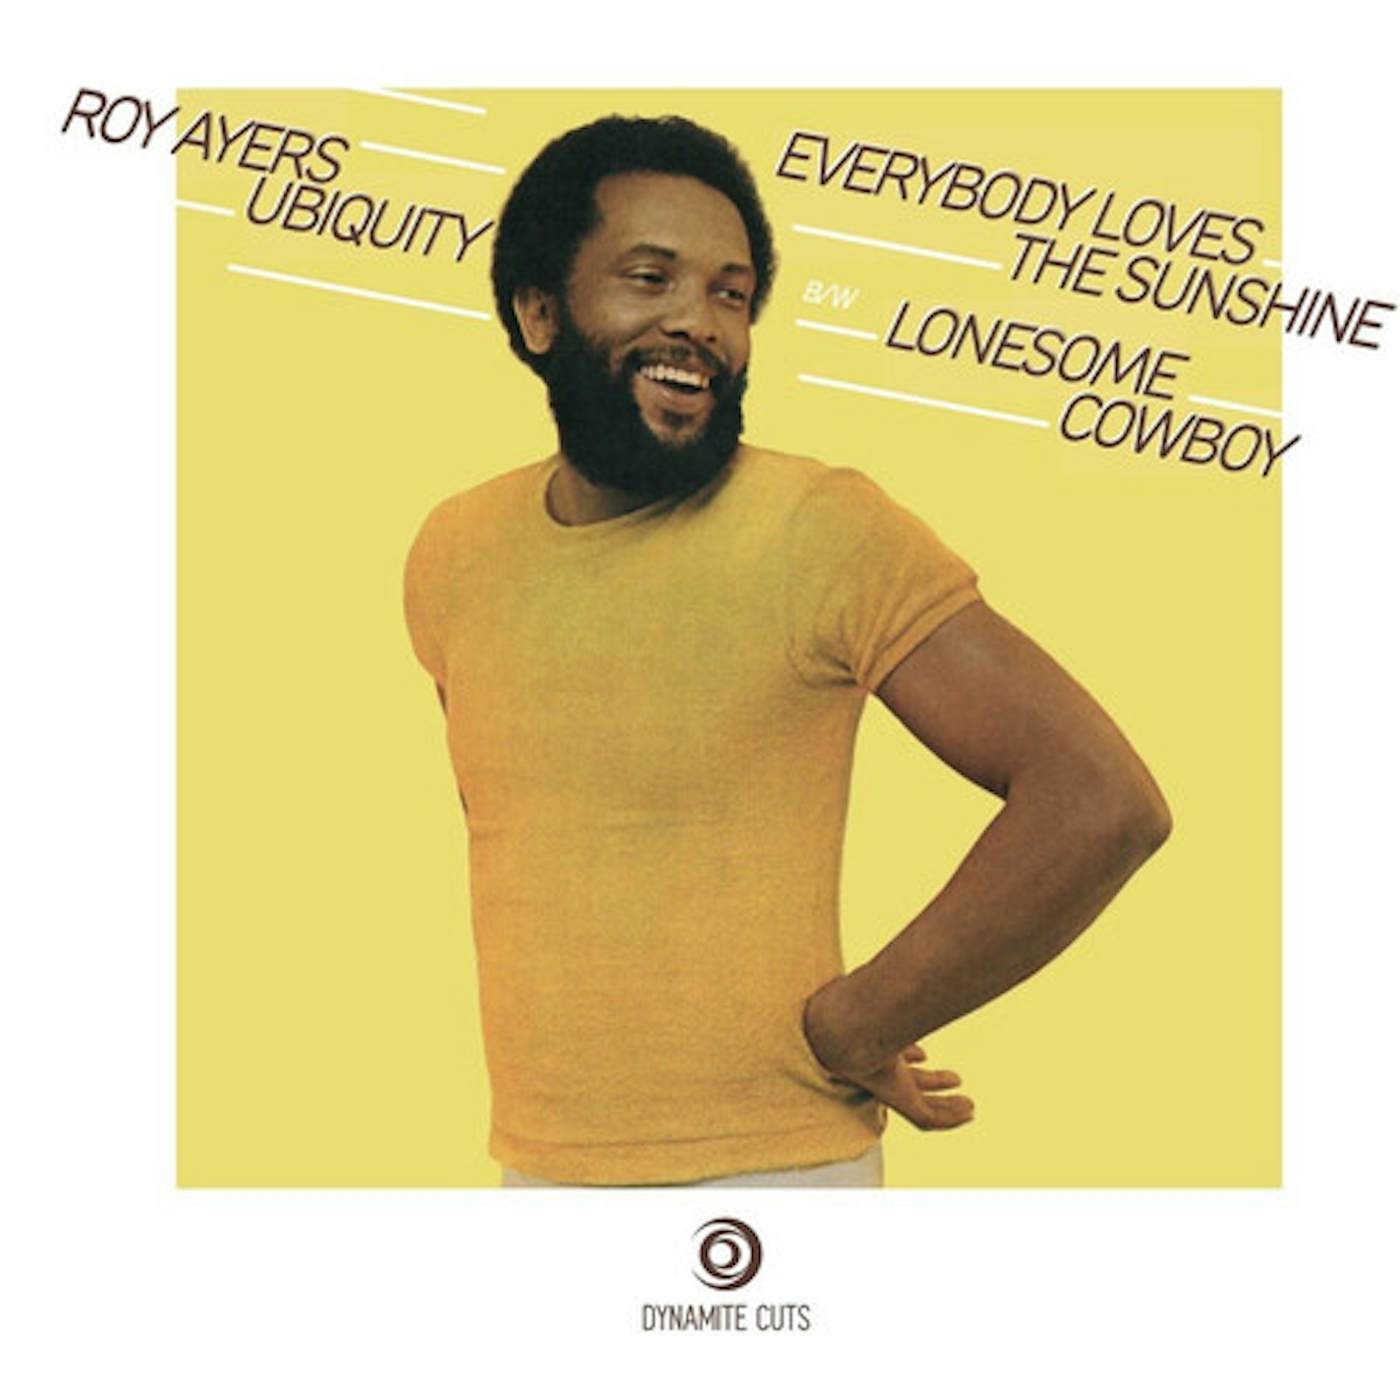 Roy Ayers EVERYBODY LOVES THE SUNSHINE B/W LONESOME COWBOY Vinyl Record